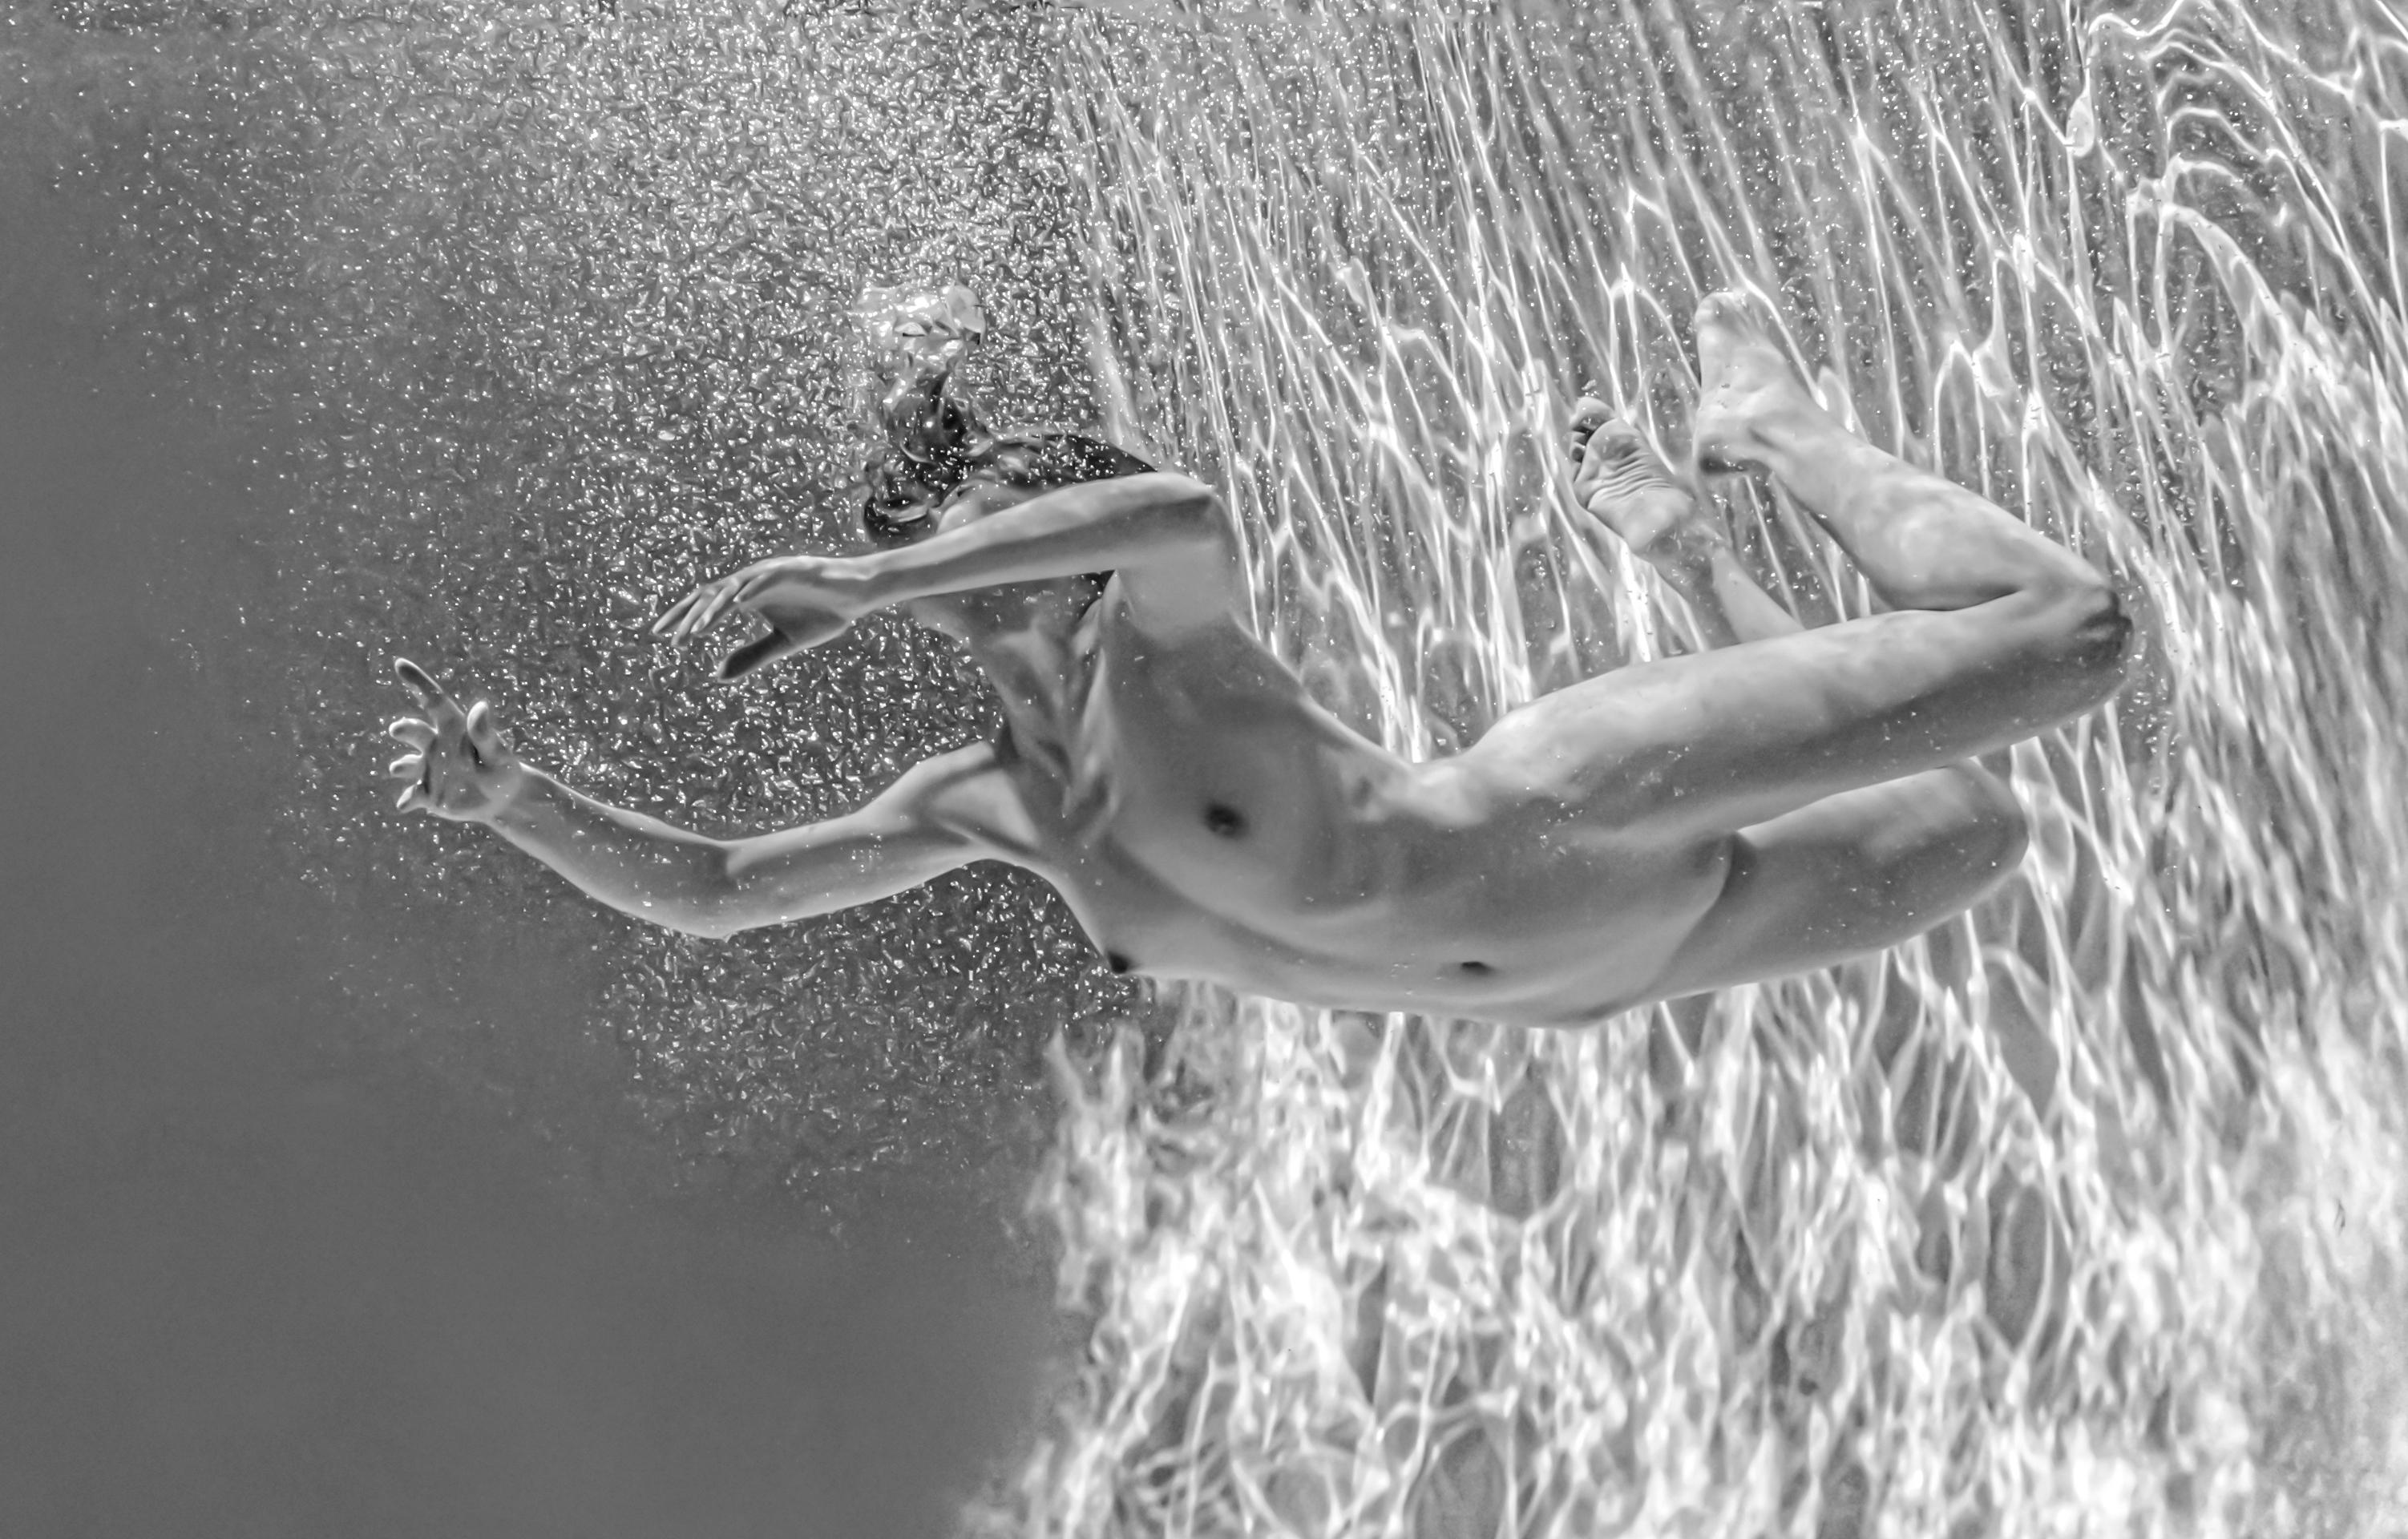 Thundercalm - underwater black&white nude photograph - print on aluminum 24x36